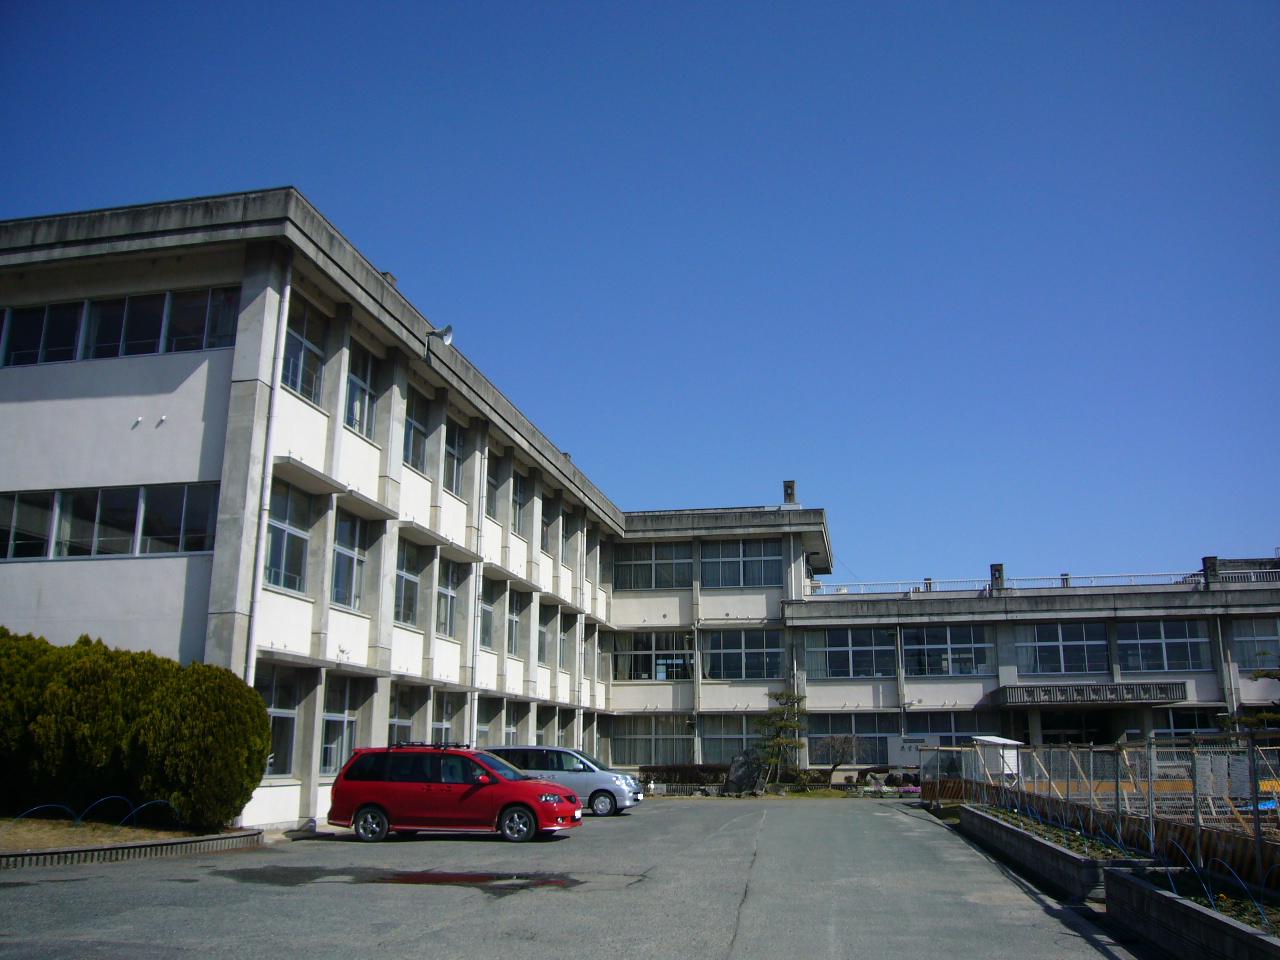 Primary school. Moriyama City Hexi up to elementary school (elementary school) 541m